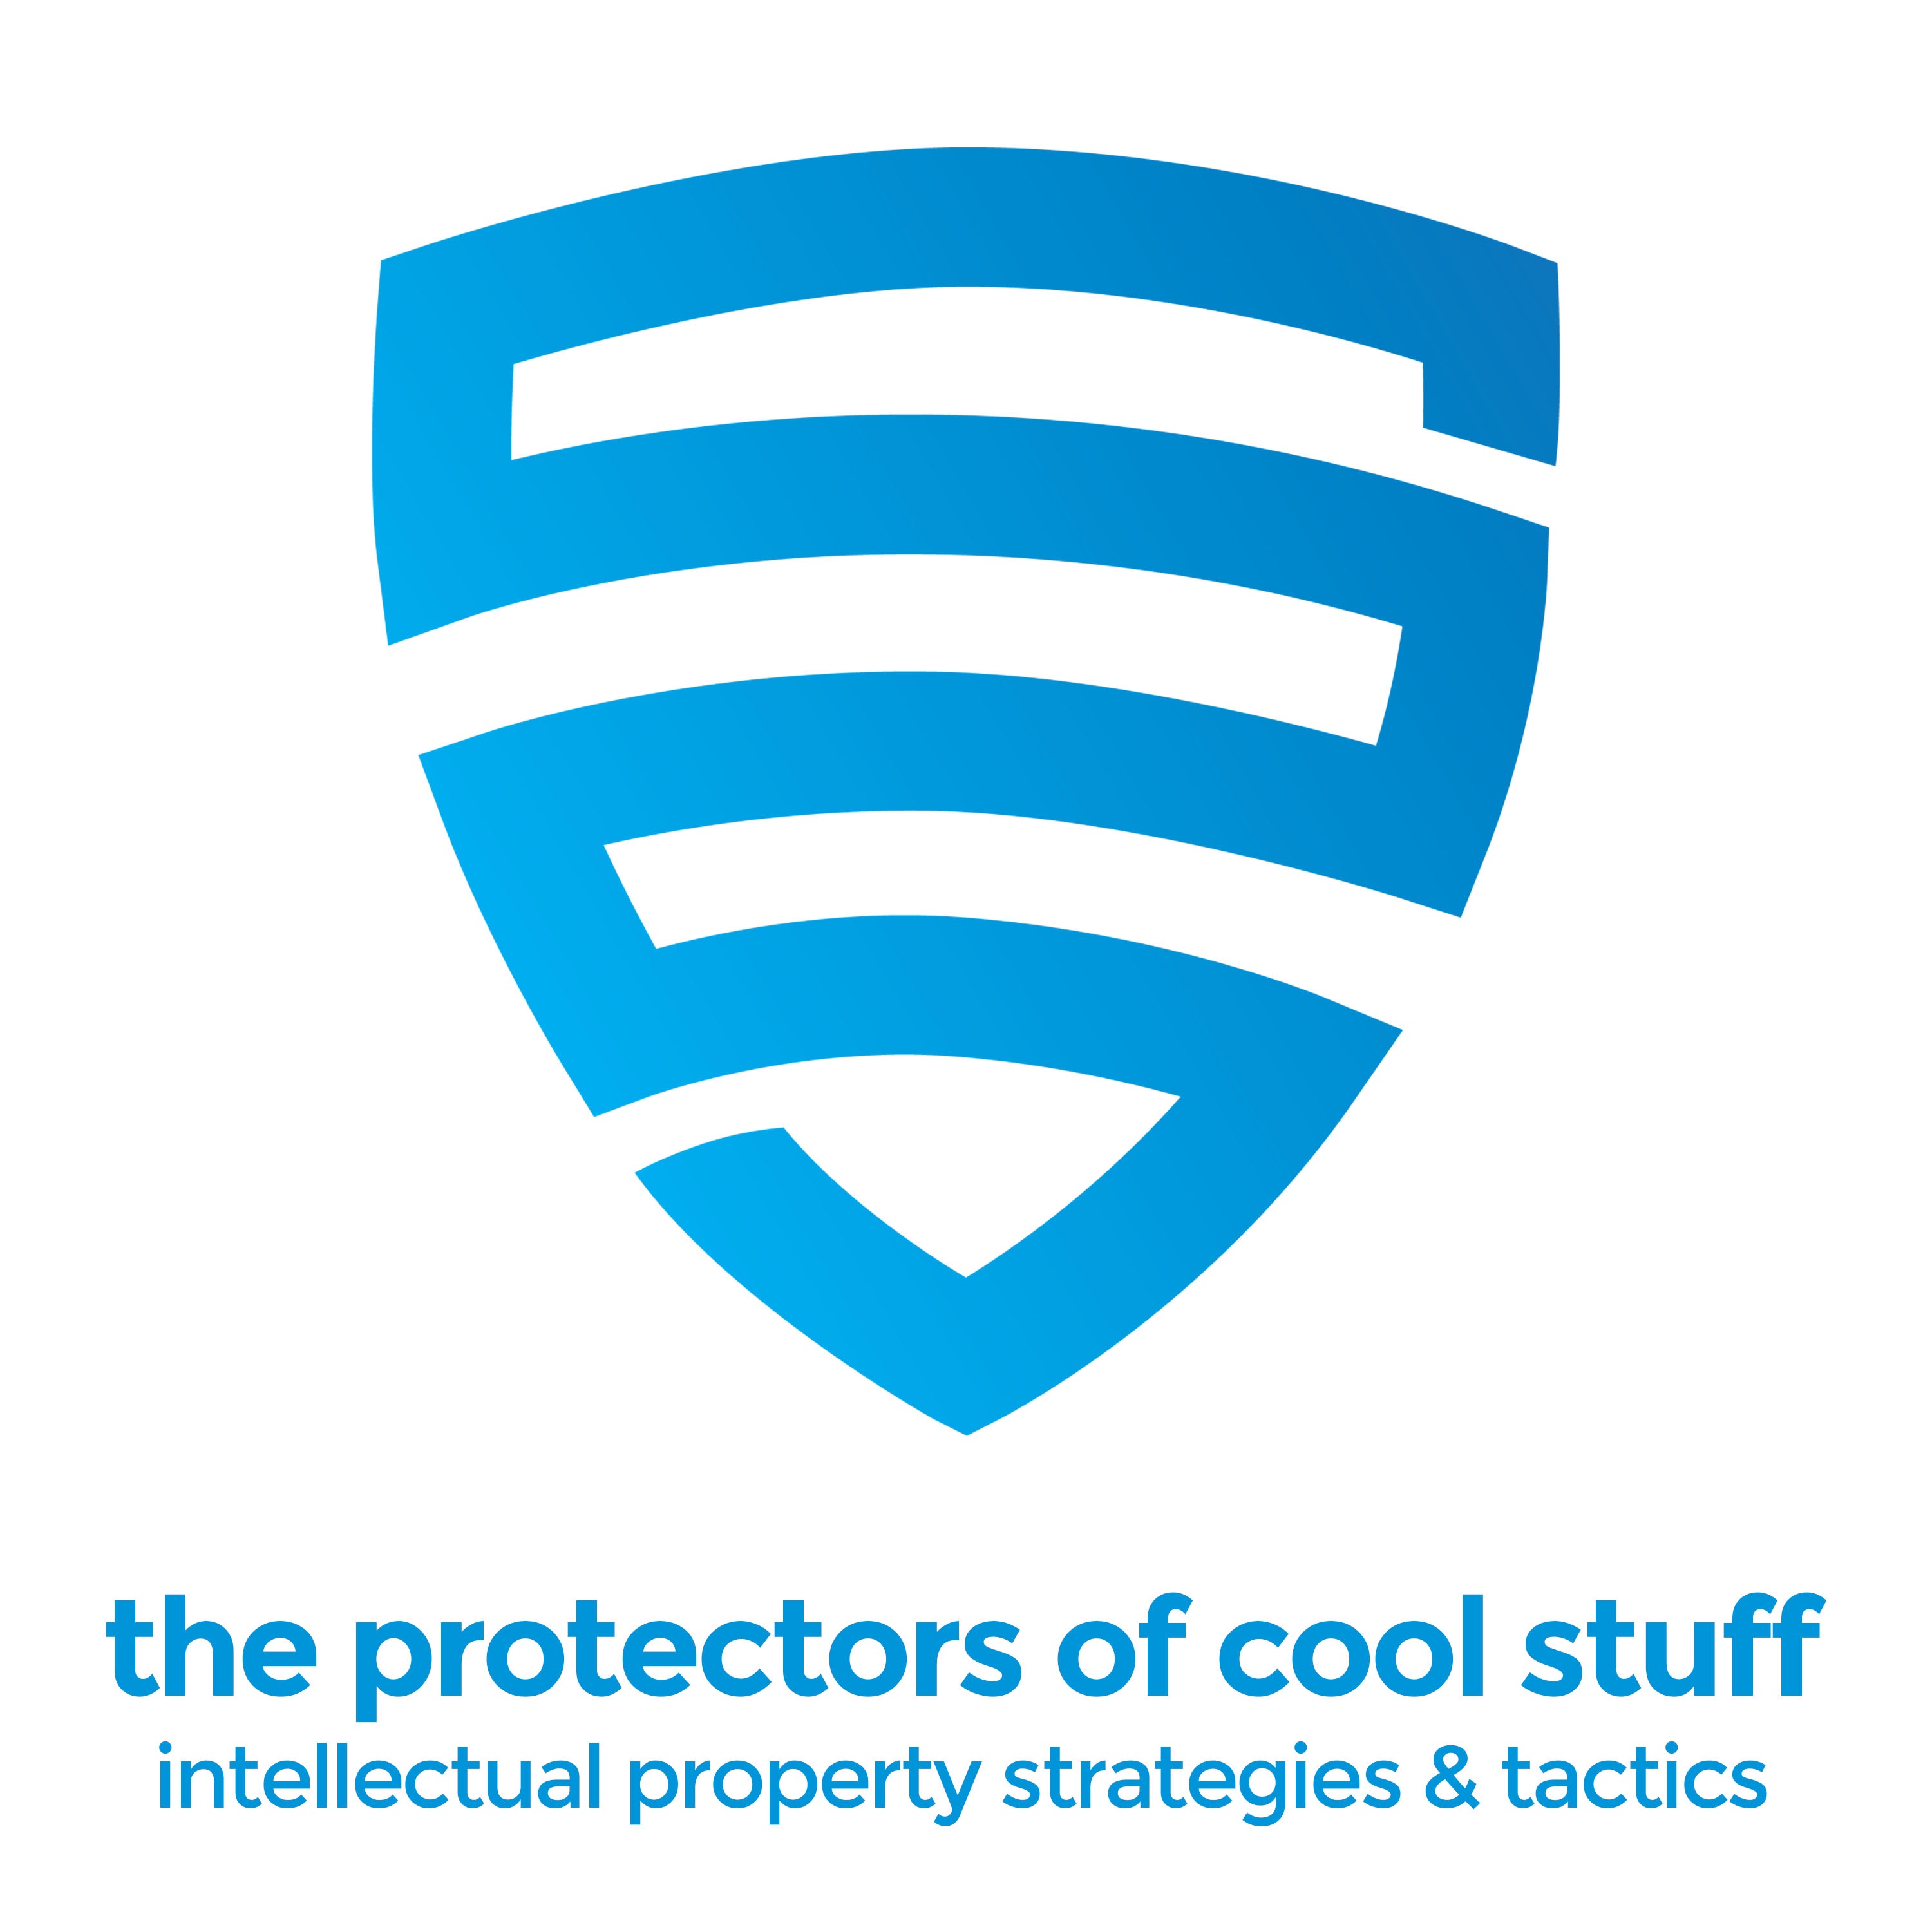 The Protectors of Cool Stuff